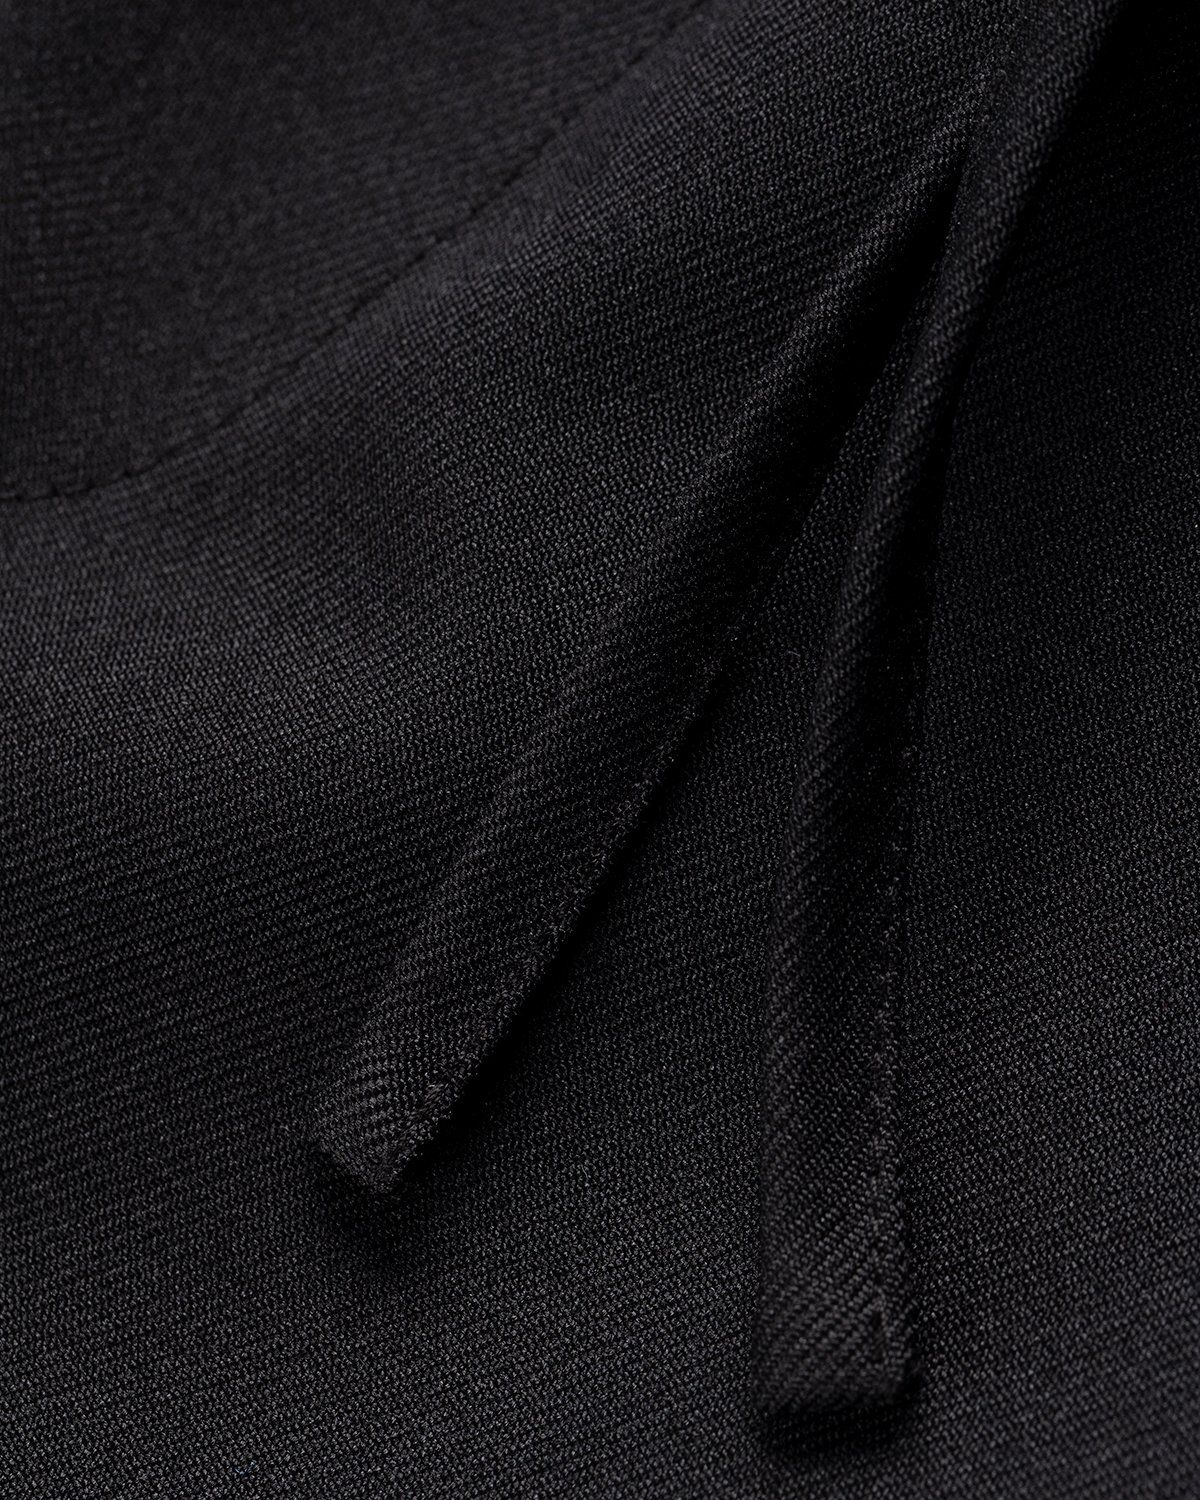 Jil Sander – Trouser D 09 AW 20 Black - Pants - Black - Image 7